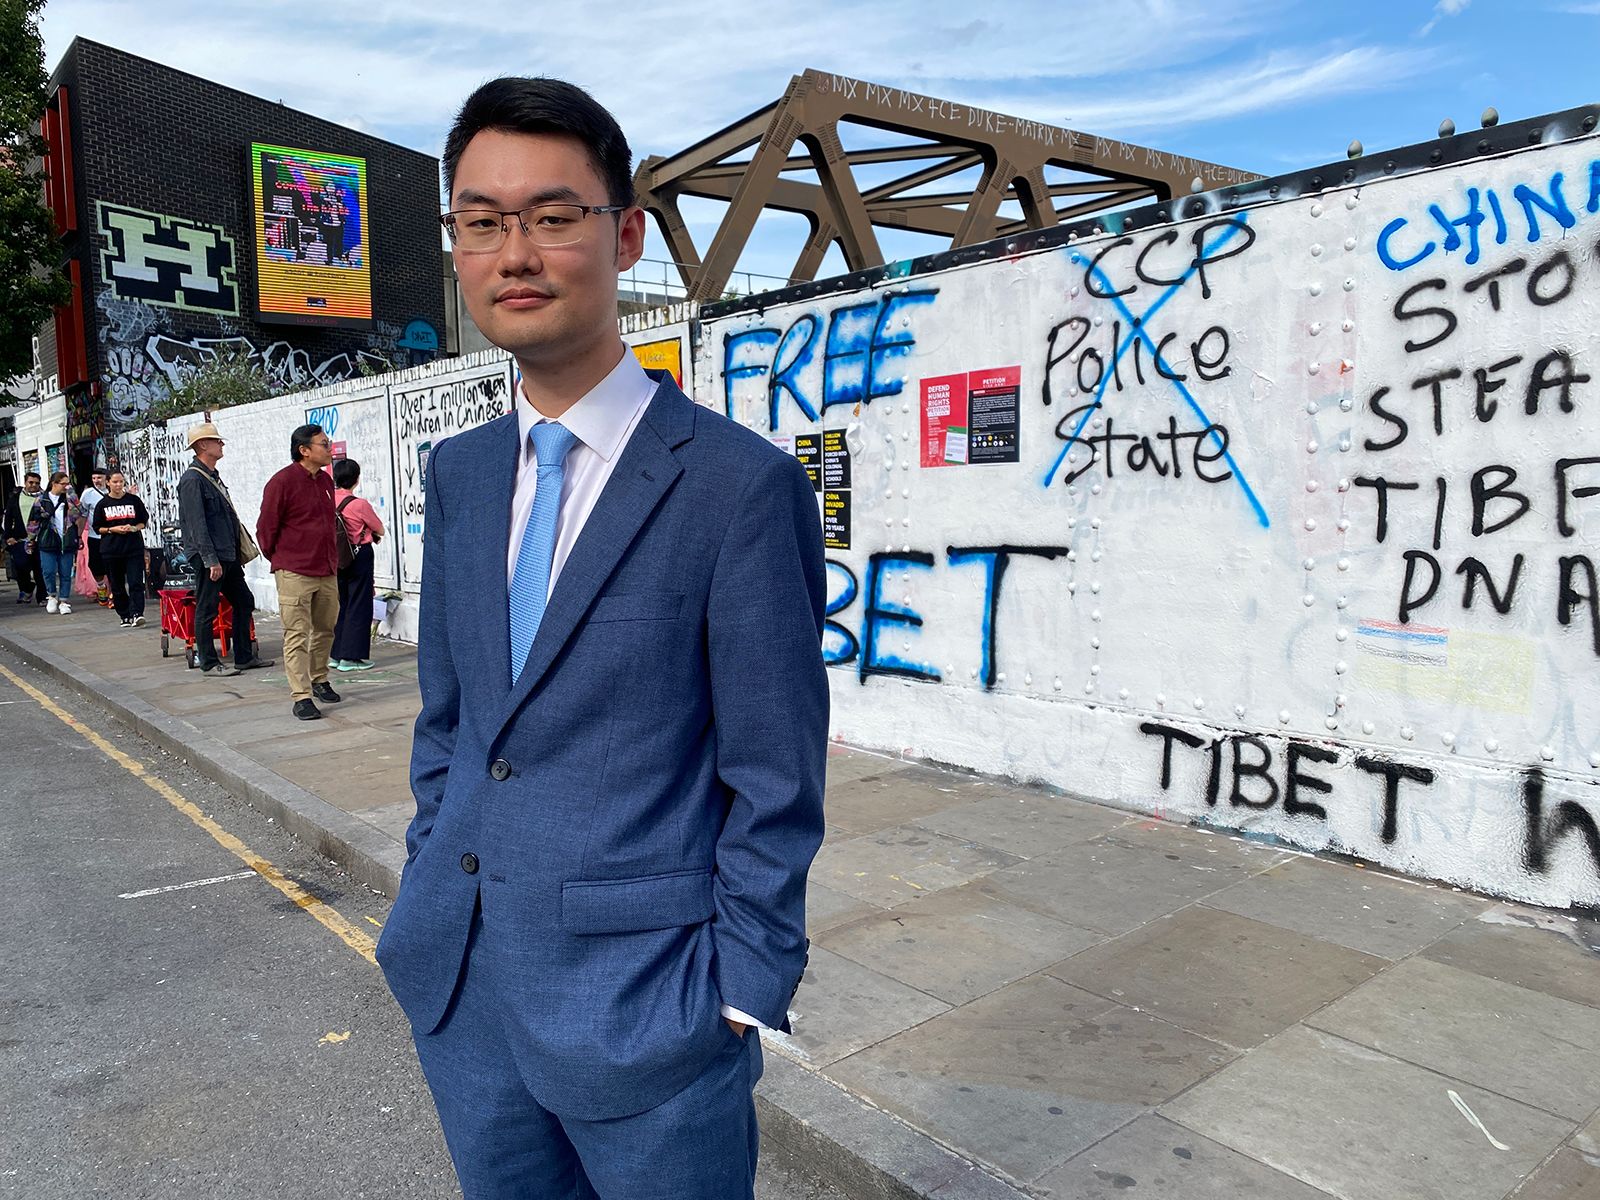 Chinese Communist Party slogans spark graffiti war on London's